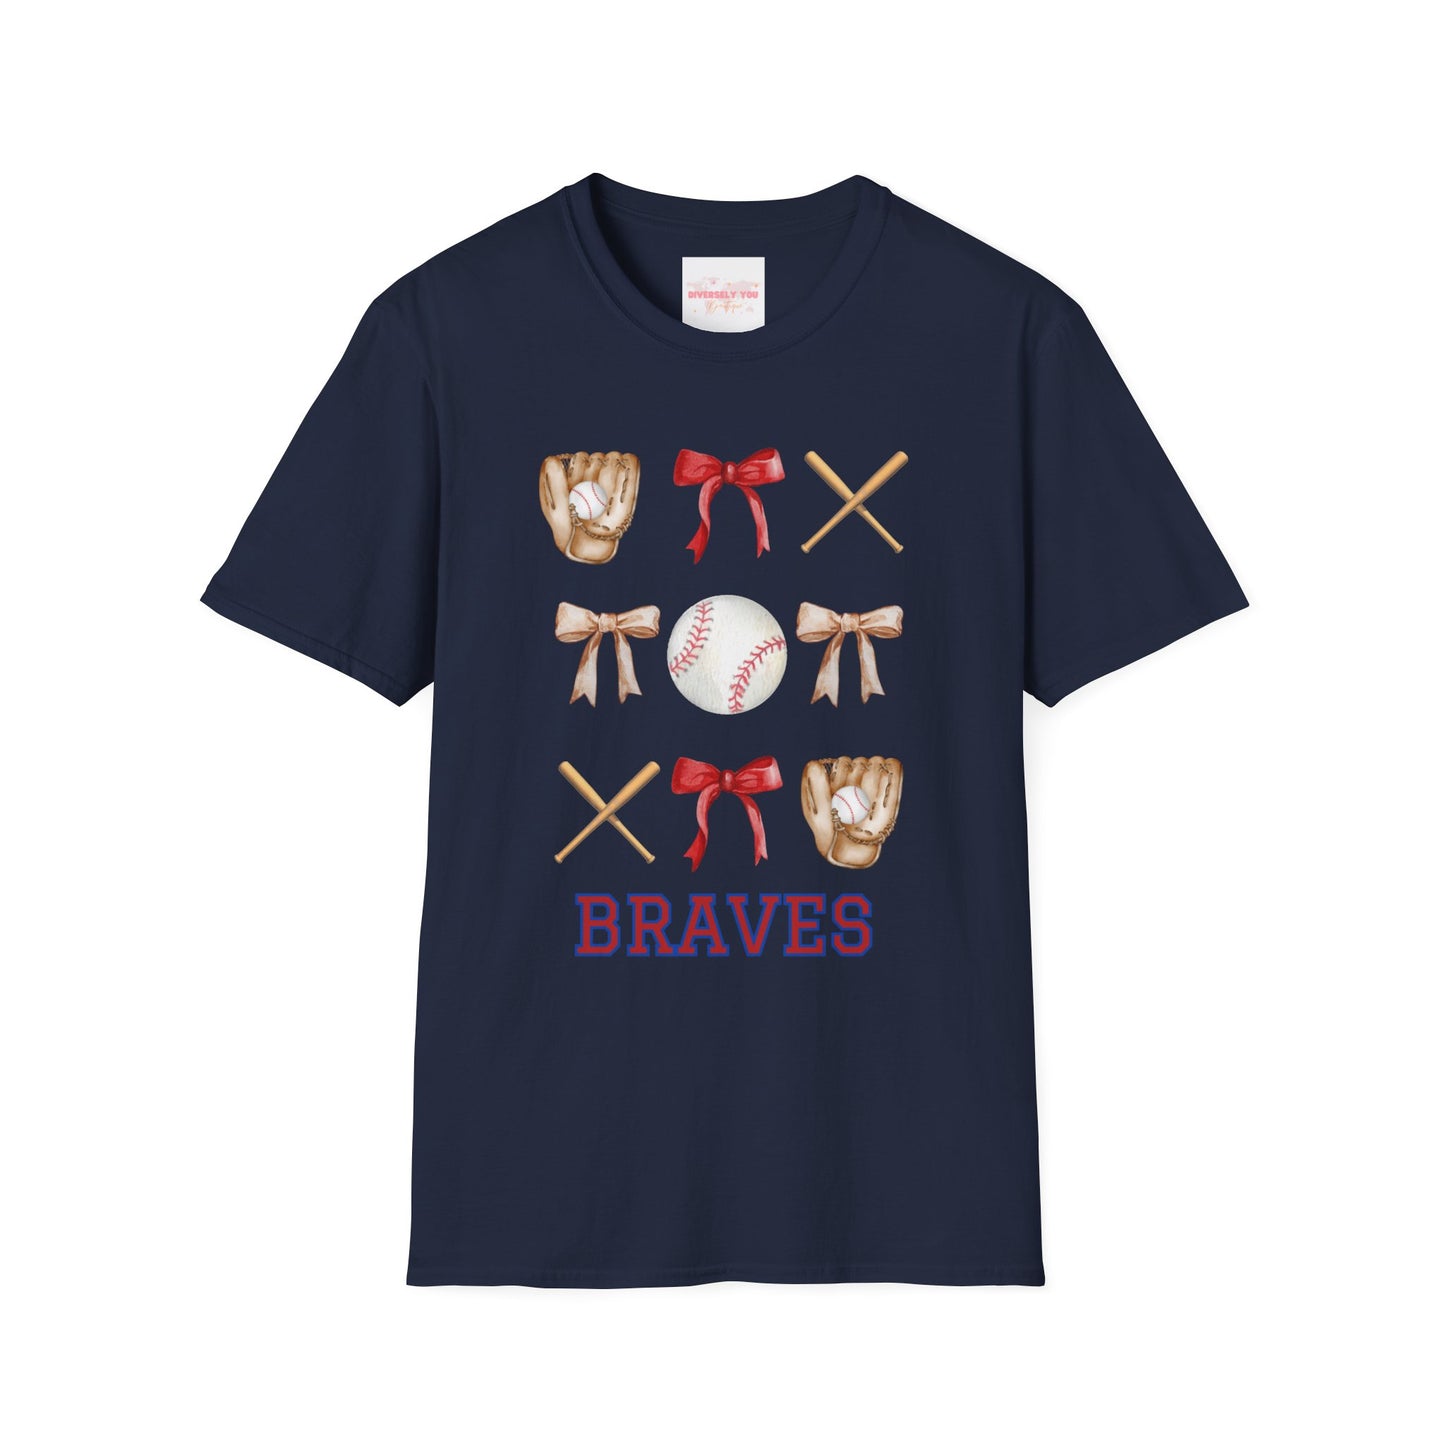 Braves Baseball Graphic Tee